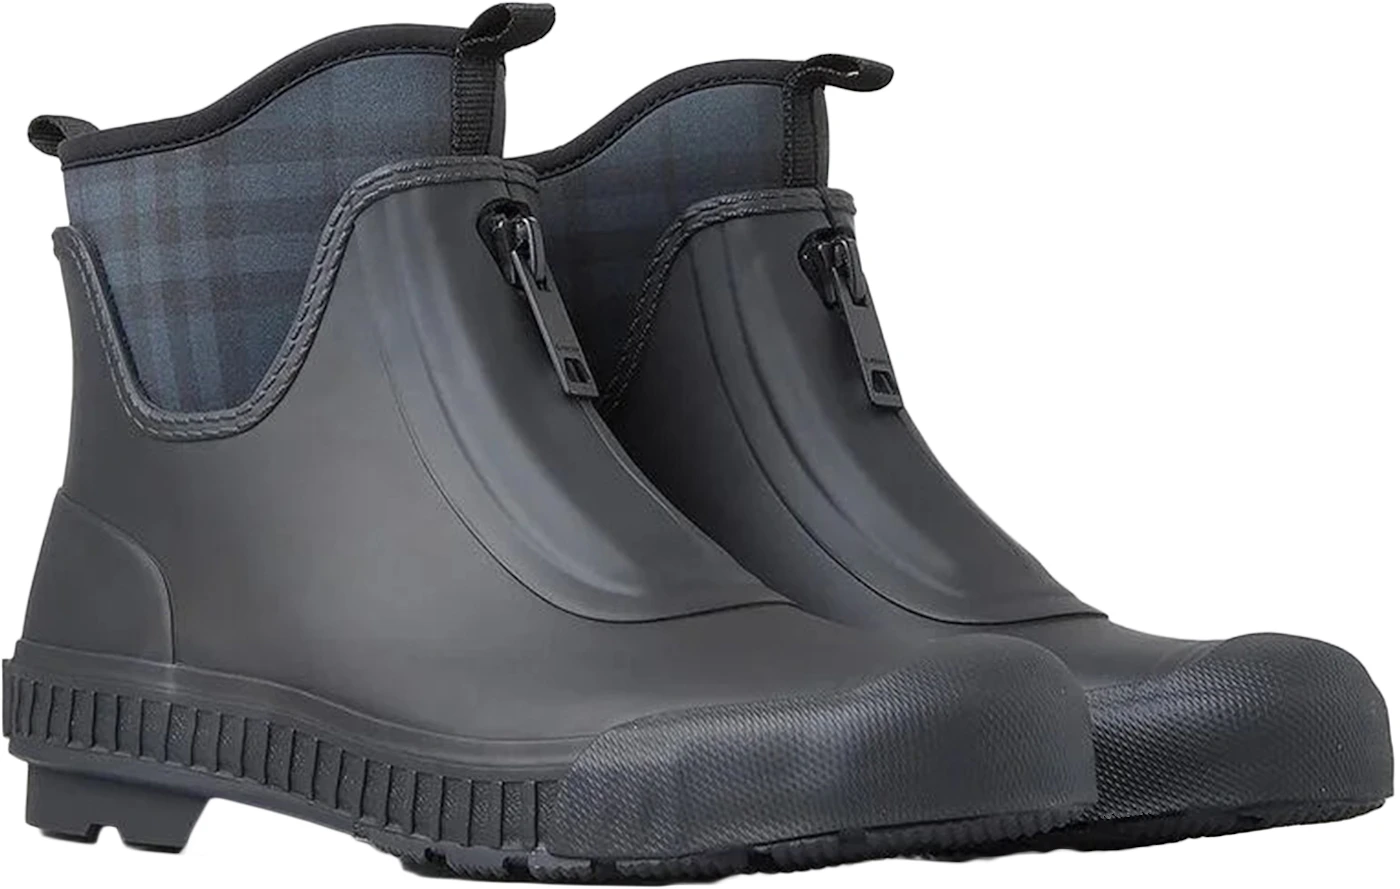 Burberry Flinton Rain Boots Black Charcoal Rubber (Women's) - 8045835 - US